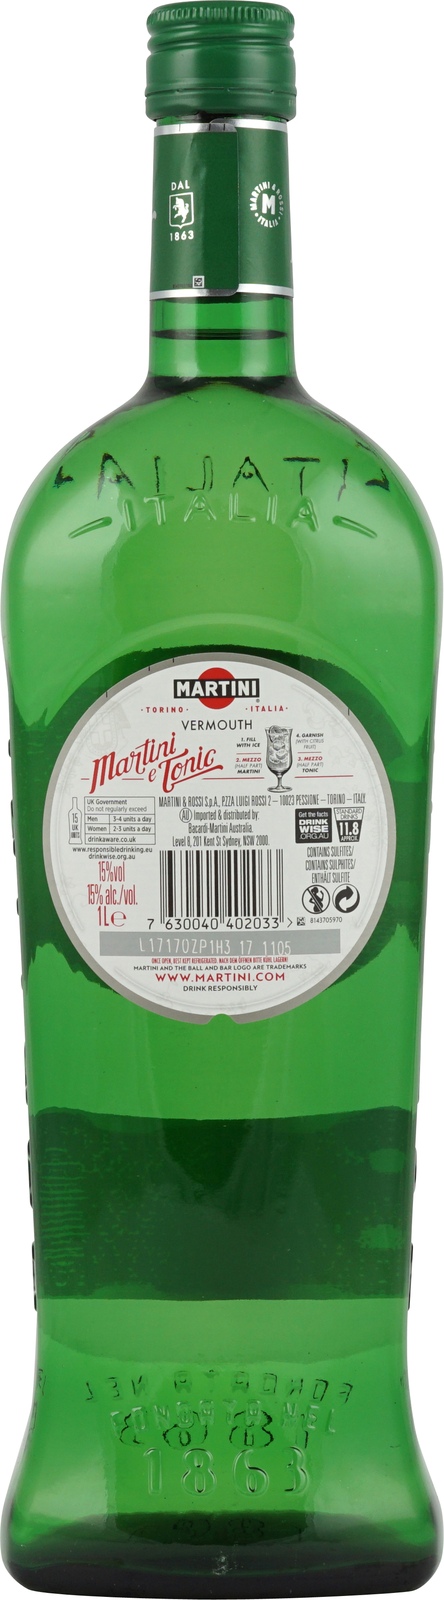 Martini Extra Dry 750 ml 15 